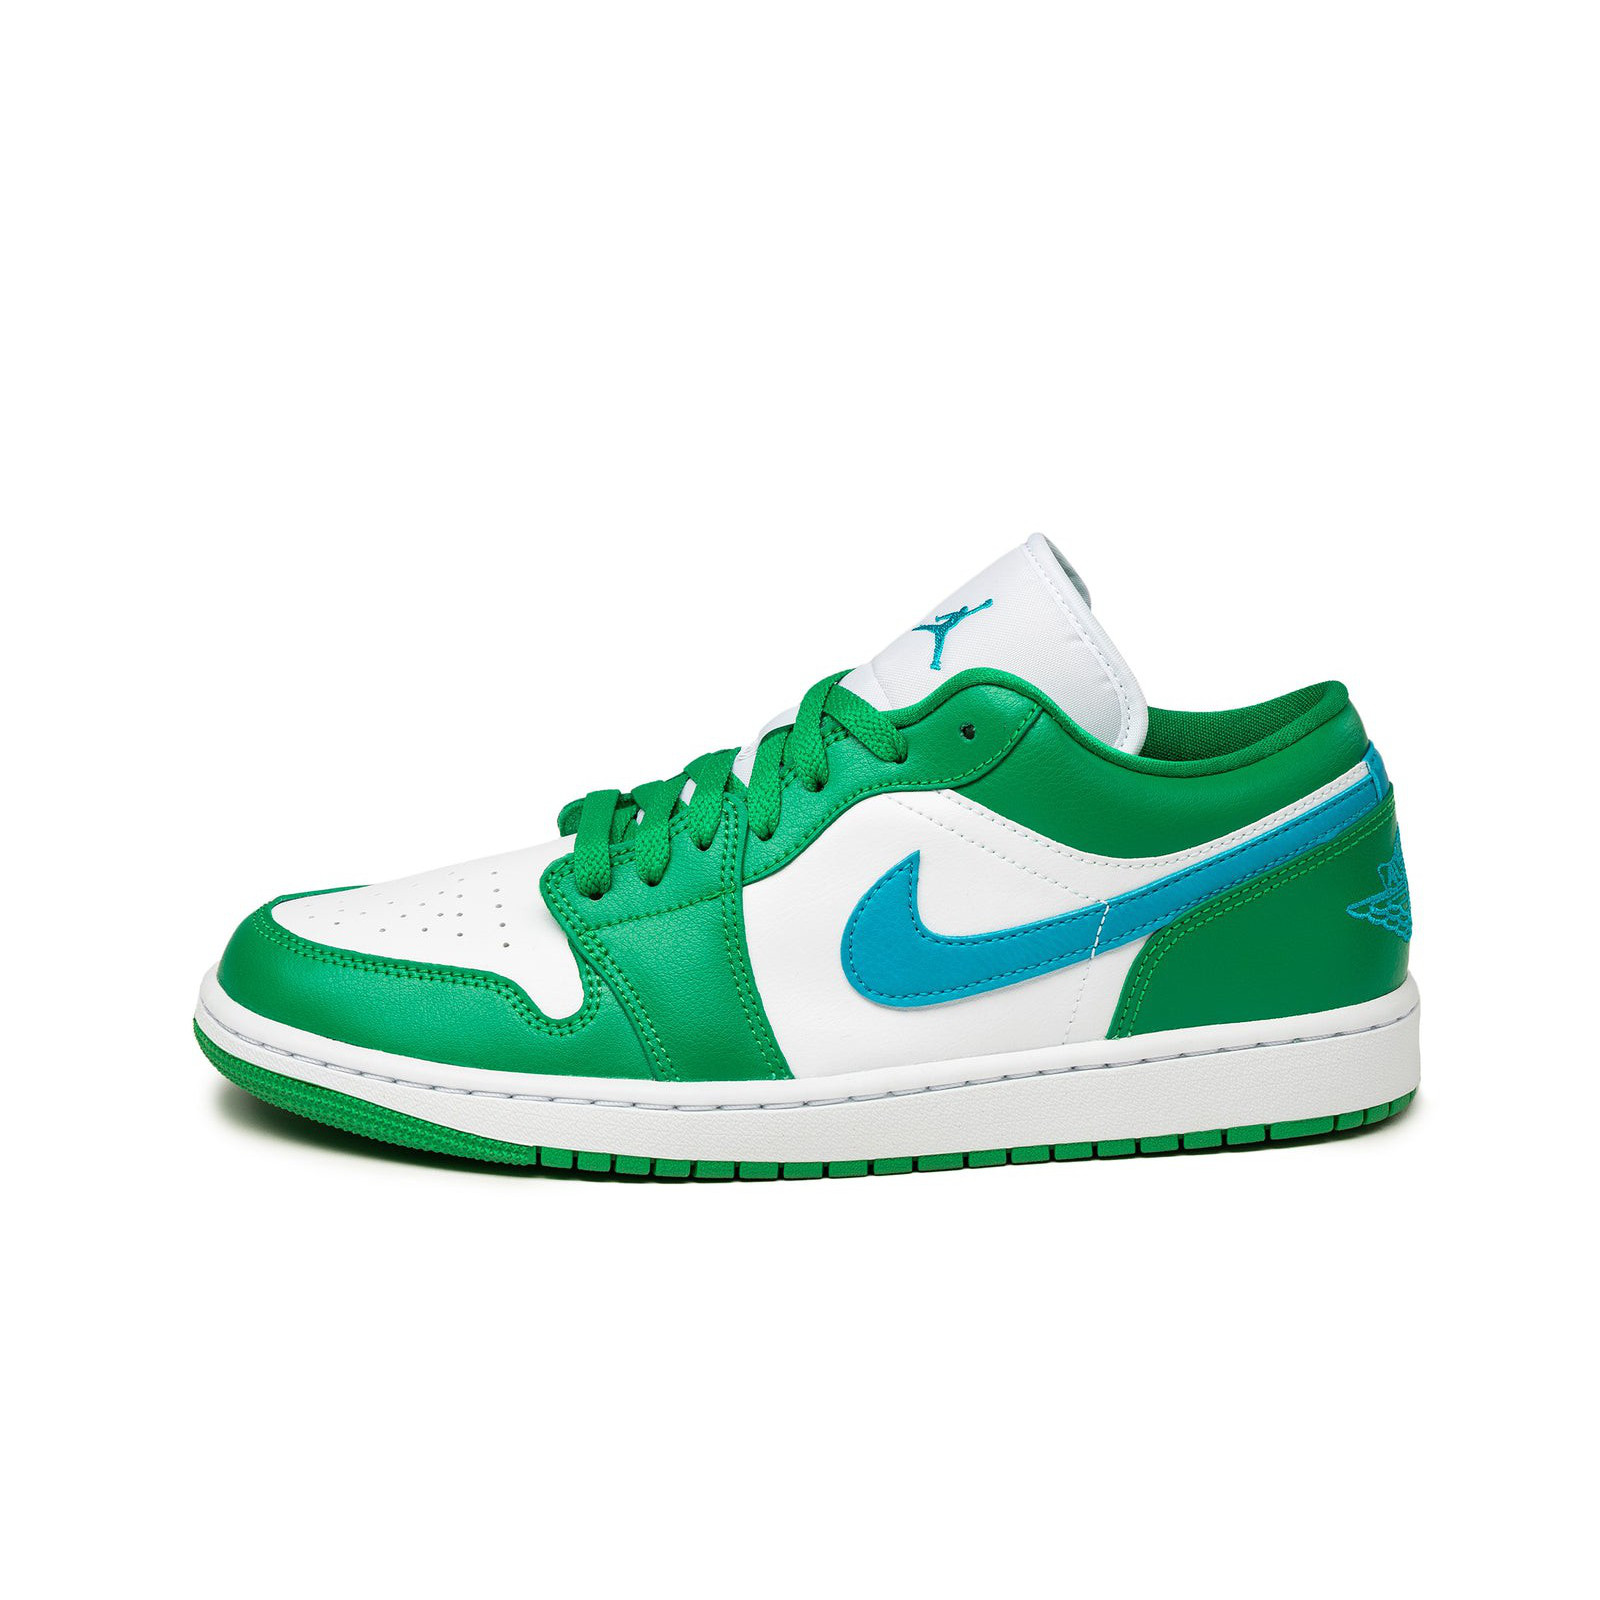 Nike Air Jordan 1 Low
« Lucky Green »